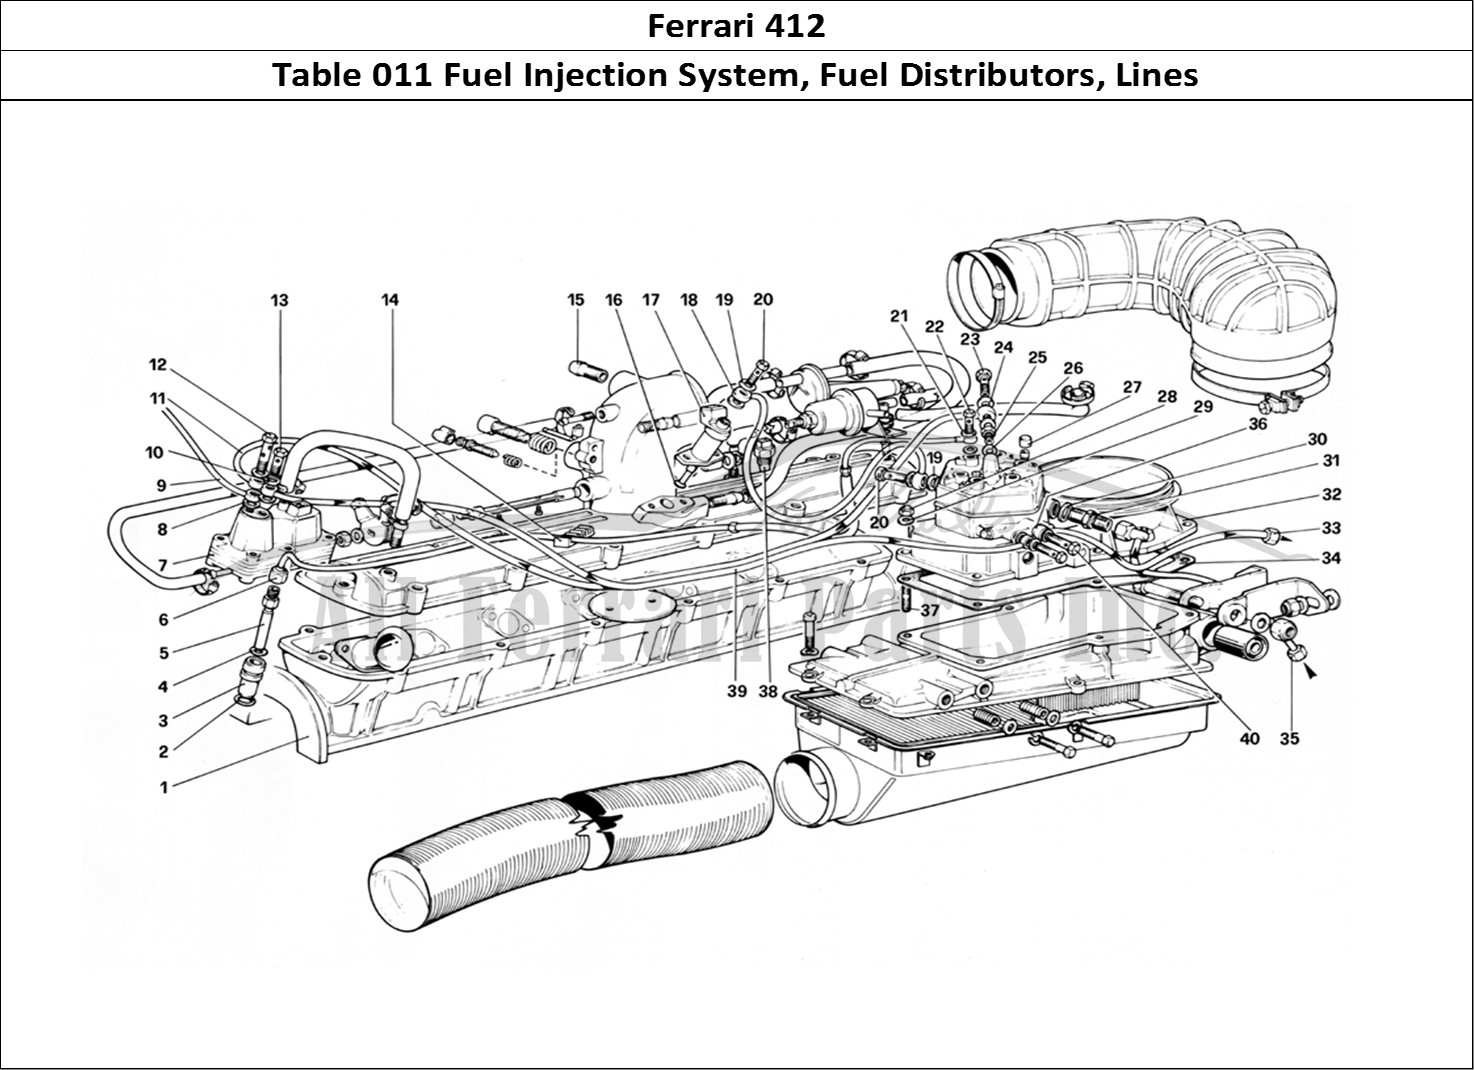 Ferrari Parts Ferrari 412 (Mechanical) Page 011 Fuel Injection System - F